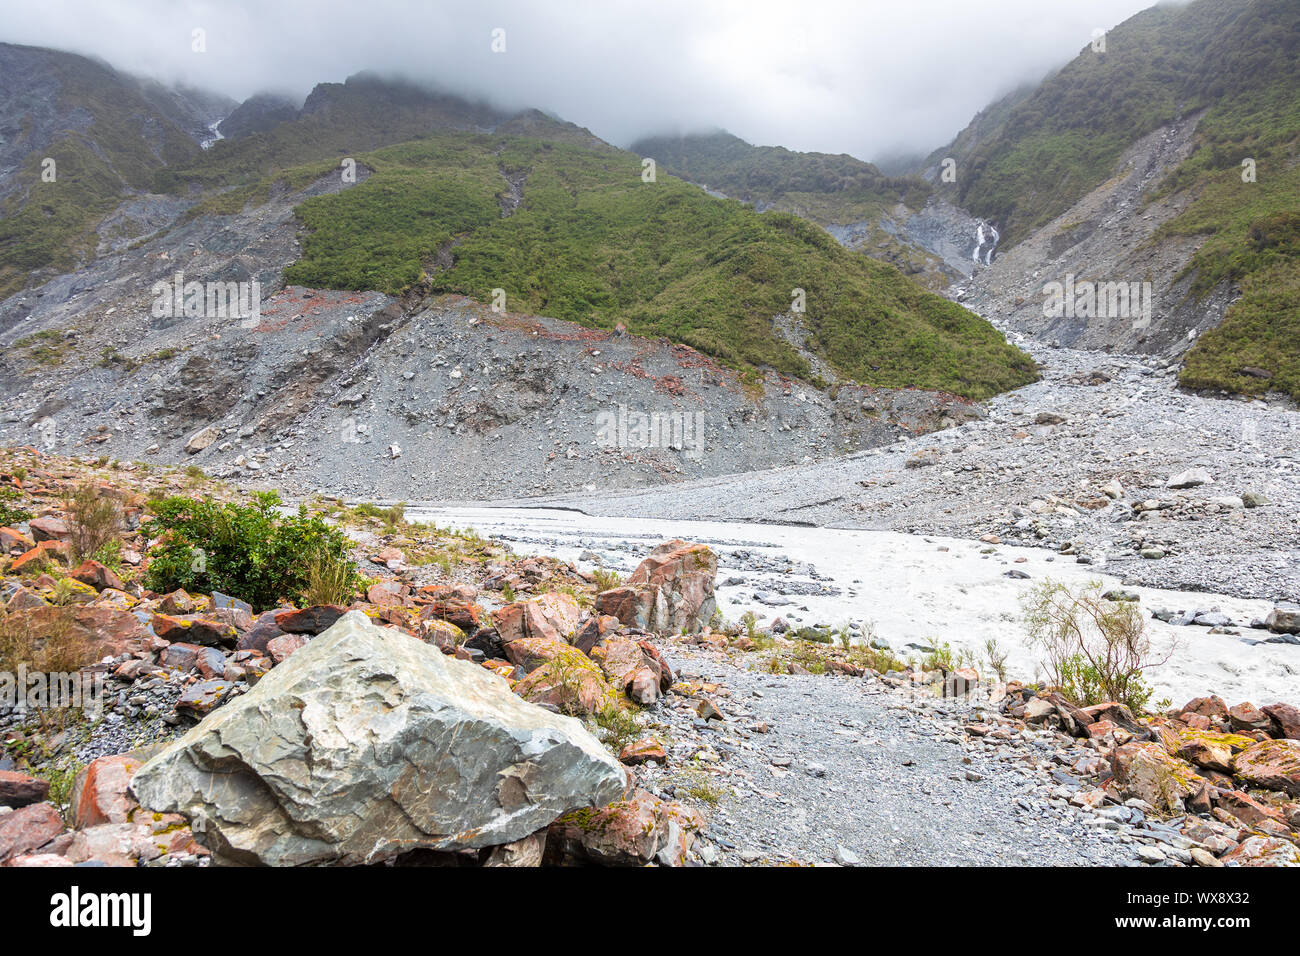 Riverbed of the Franz Josef Glacier, New Zealand Stock Photo